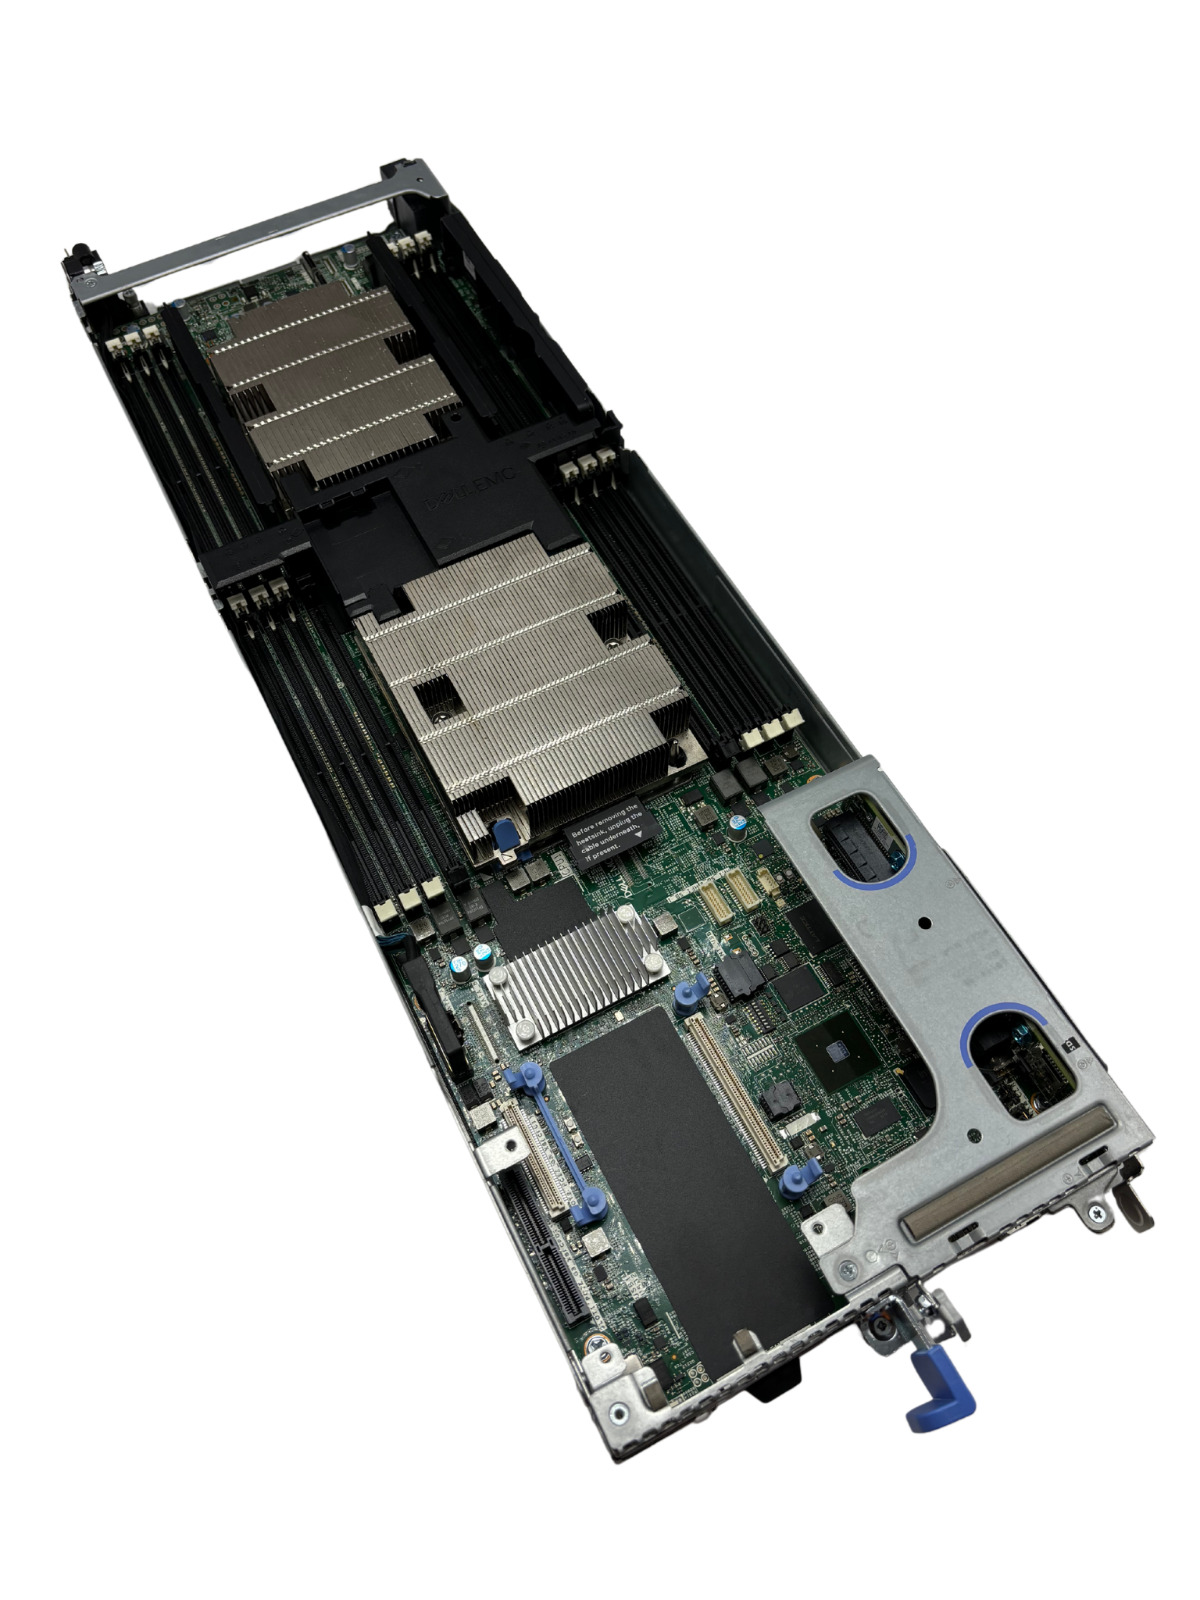 Dell Poweredge C6420 Server Node comes with 2x Heatsink idrac Enterprise w60